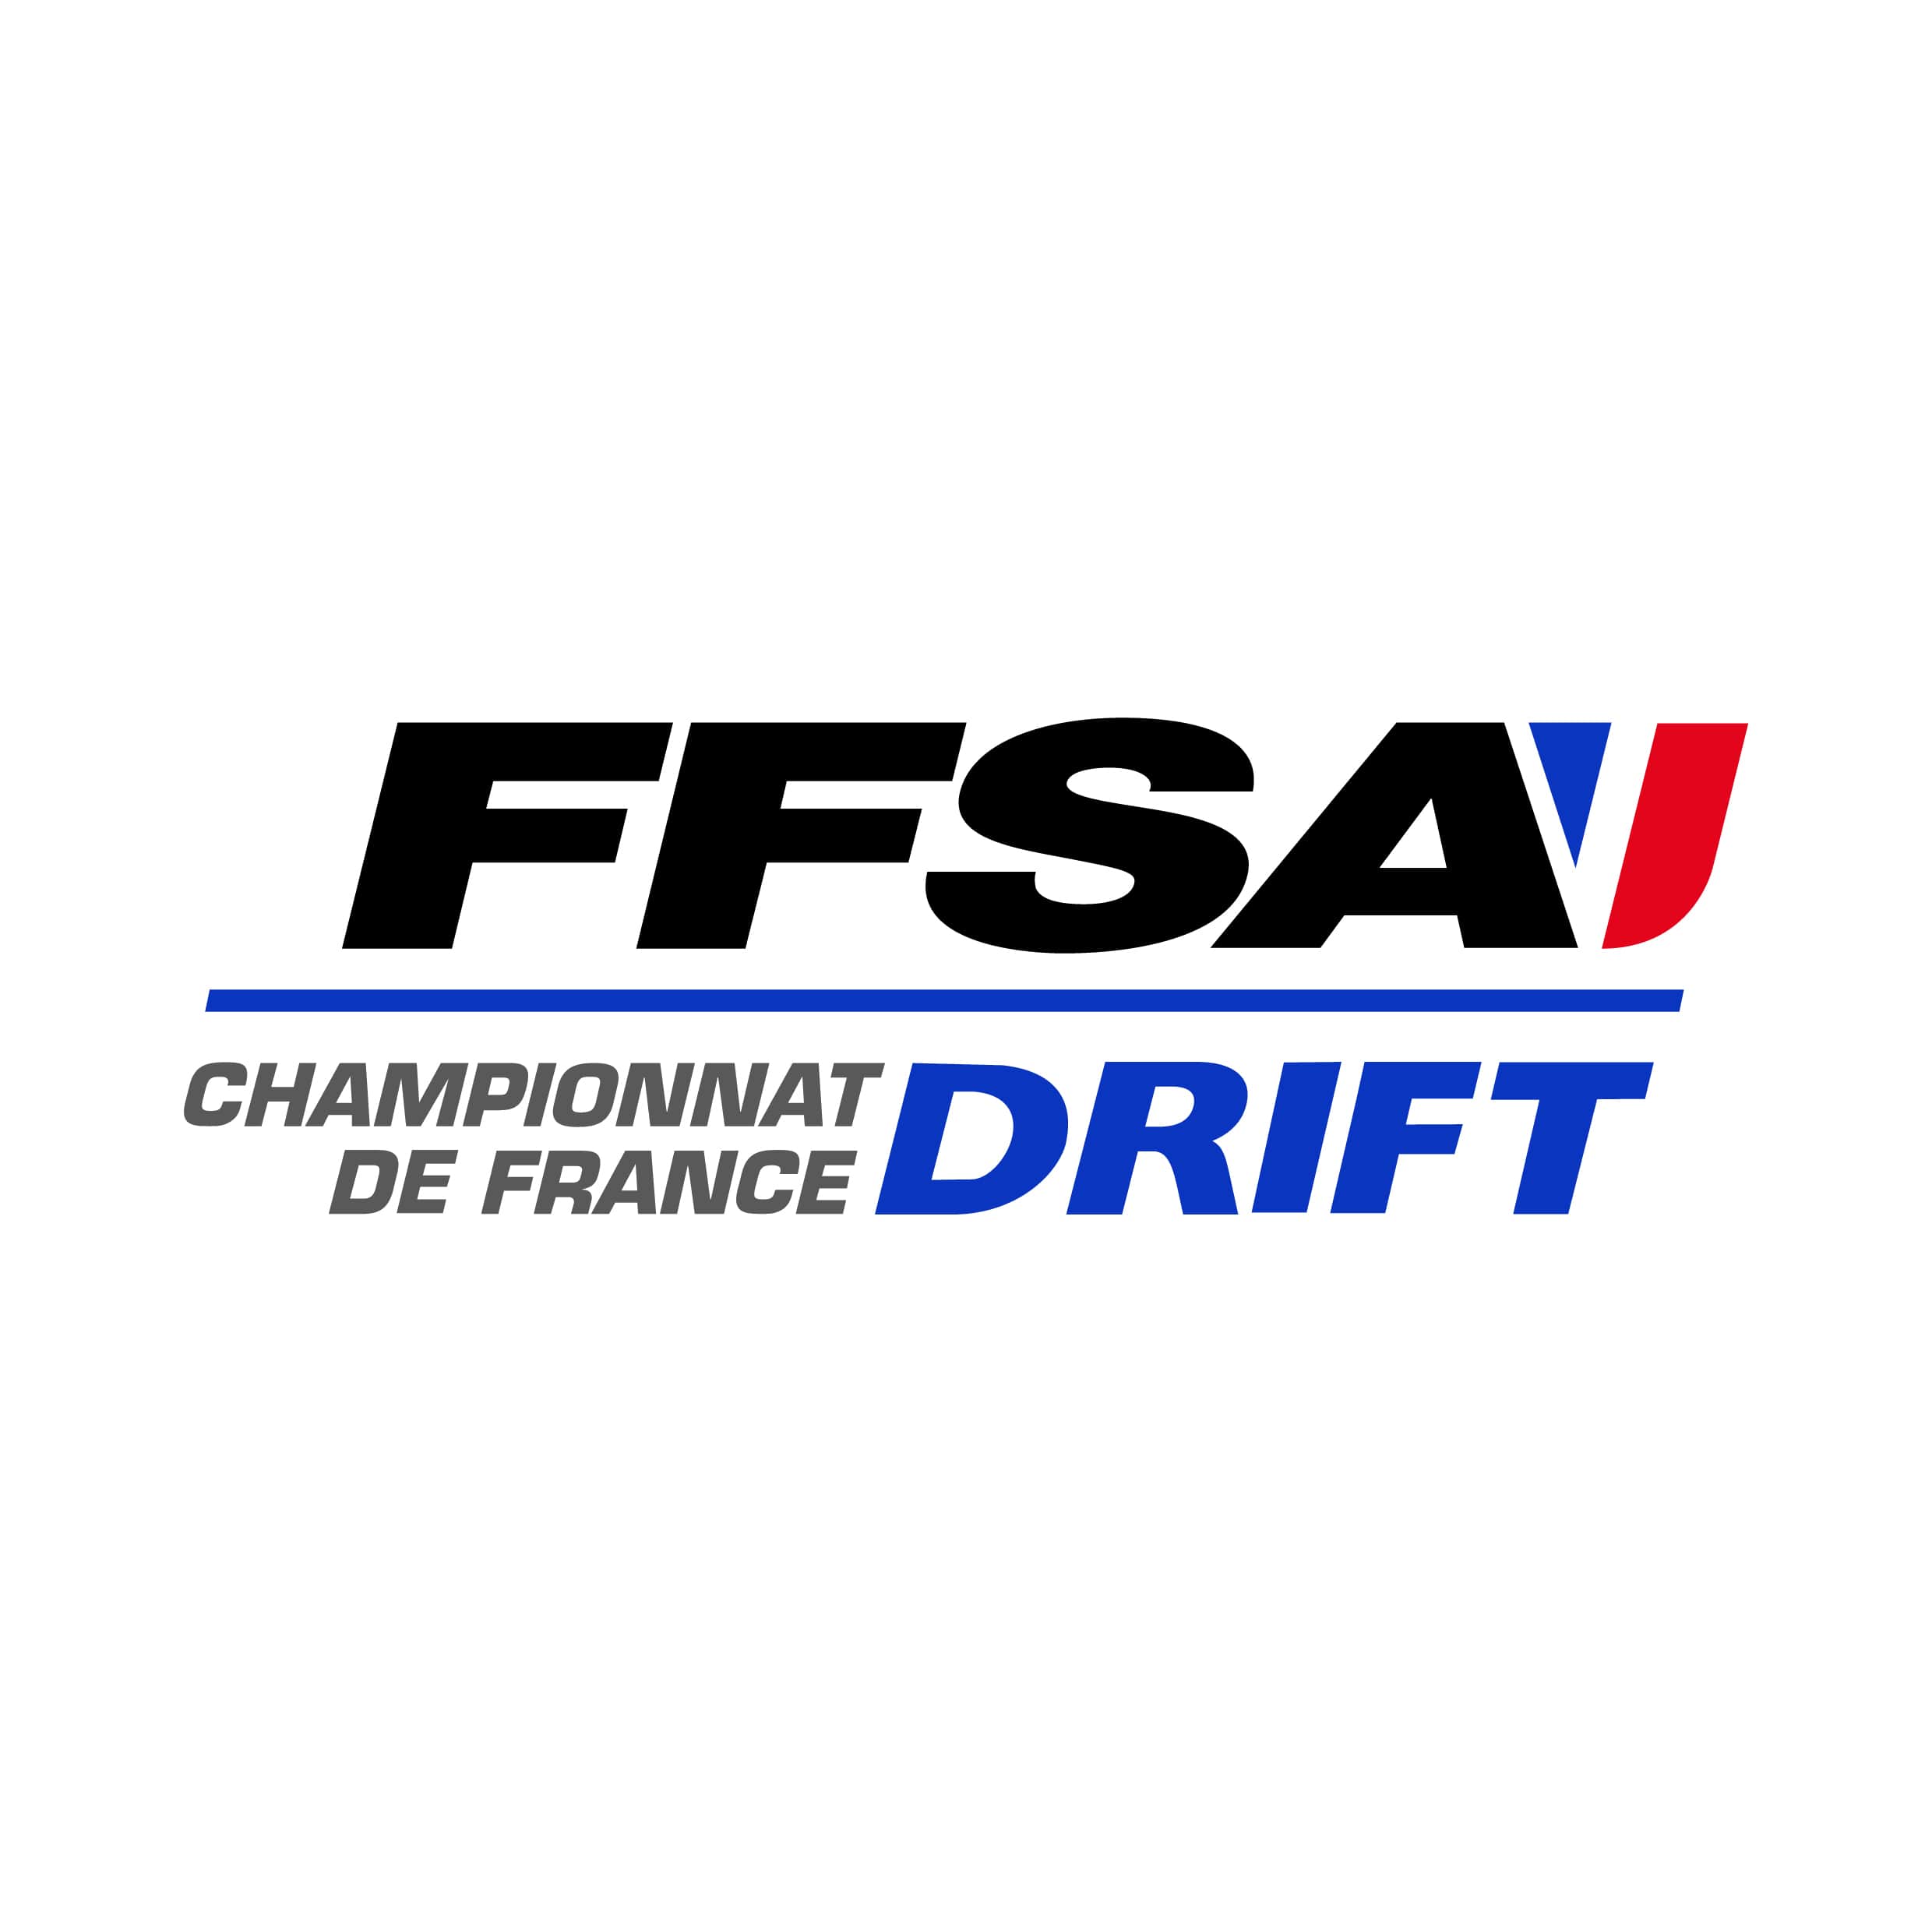 stickers-ffsa-championnat-france-drift-ref16-sport-automobile-autocollant-voiture-sticker-auto-autocollants-decals-racing-min